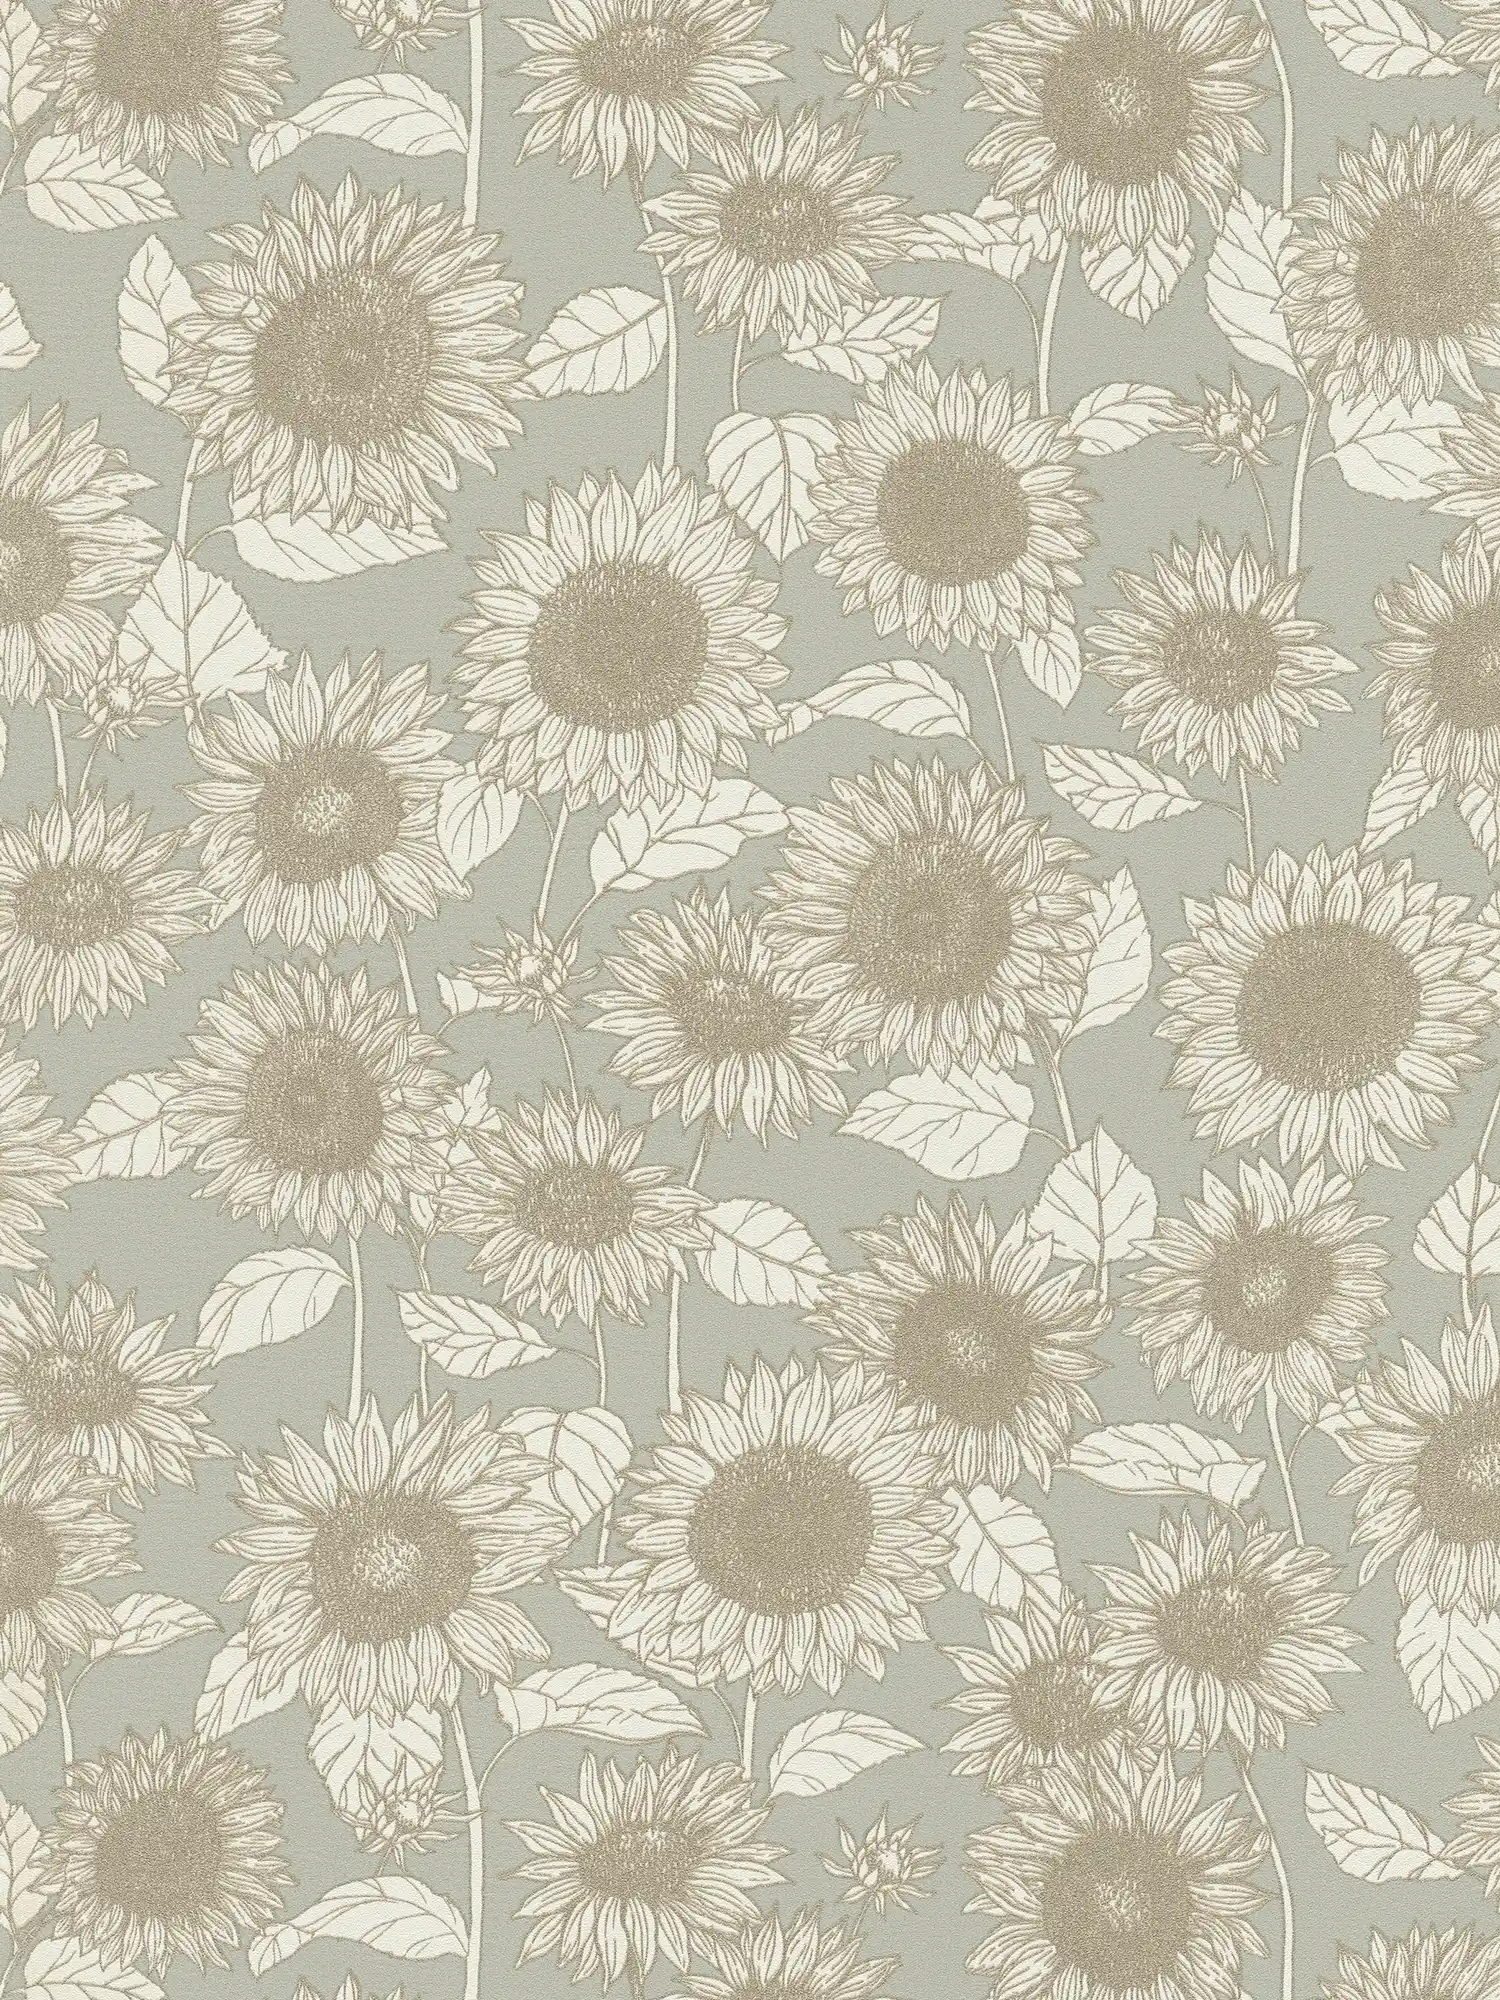 Sunflowers wallpaper metallic effect - beige, grey, cream
